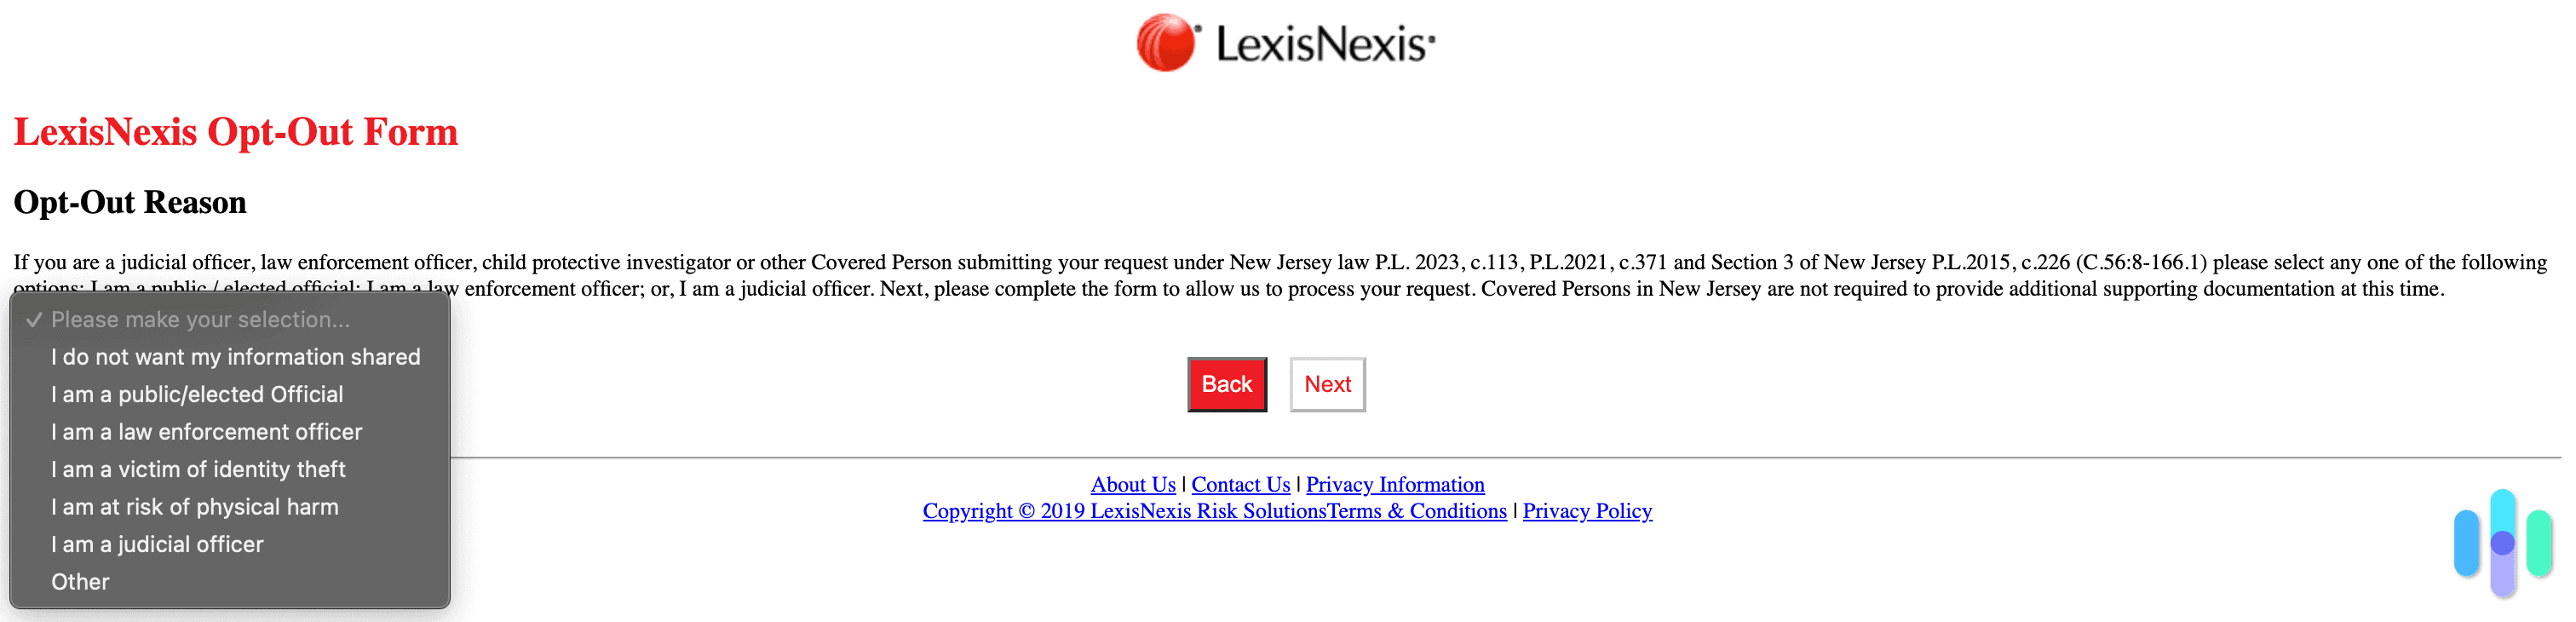 The LexisNexis opt out form reason list